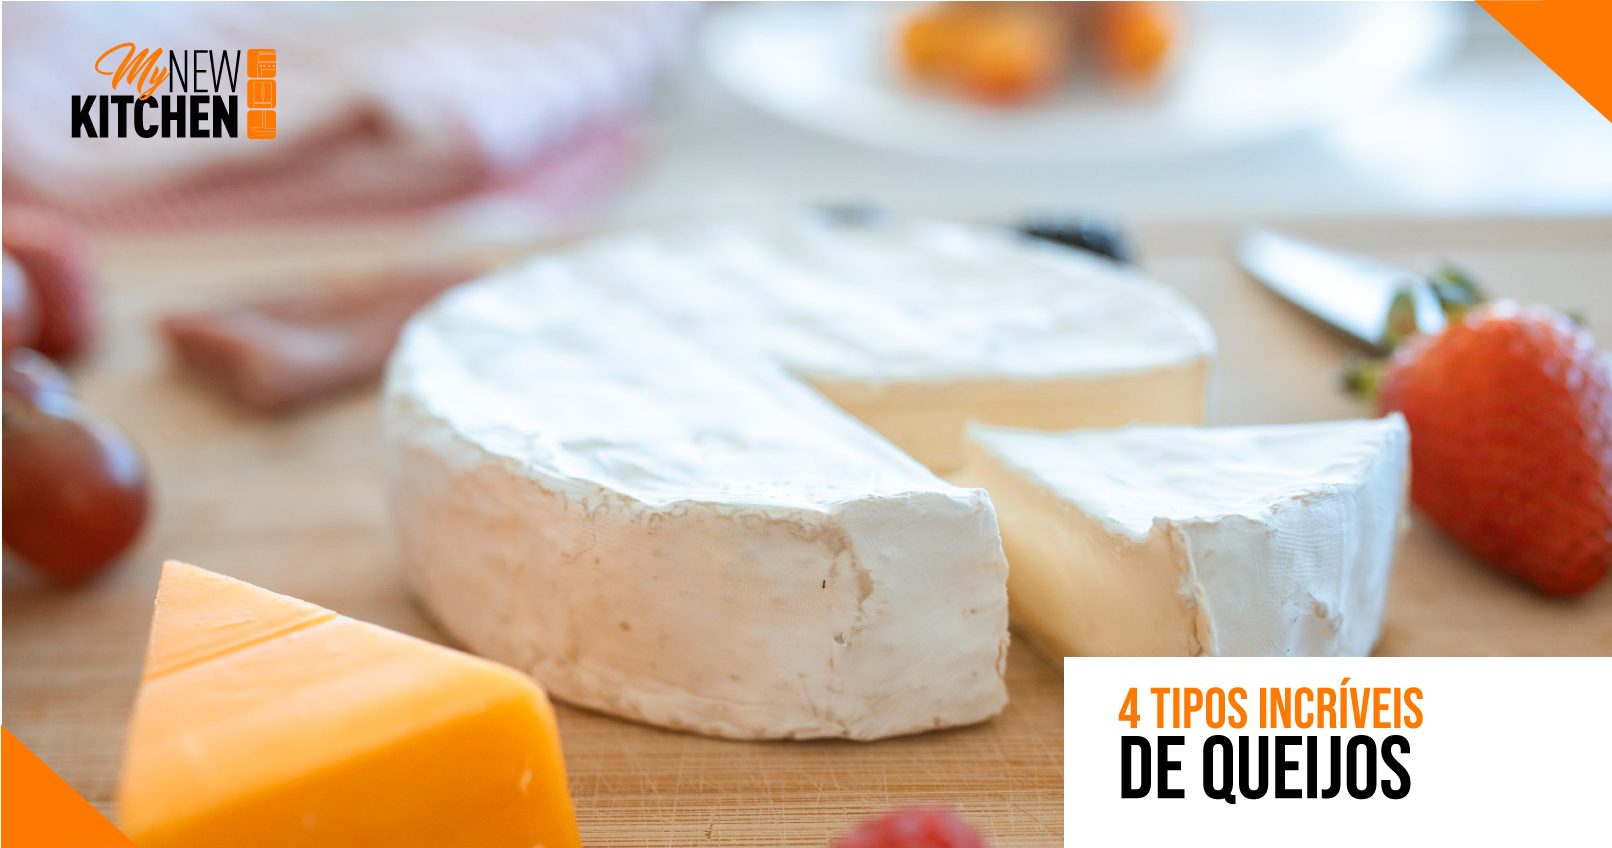 4 tipos incríveis de queijos